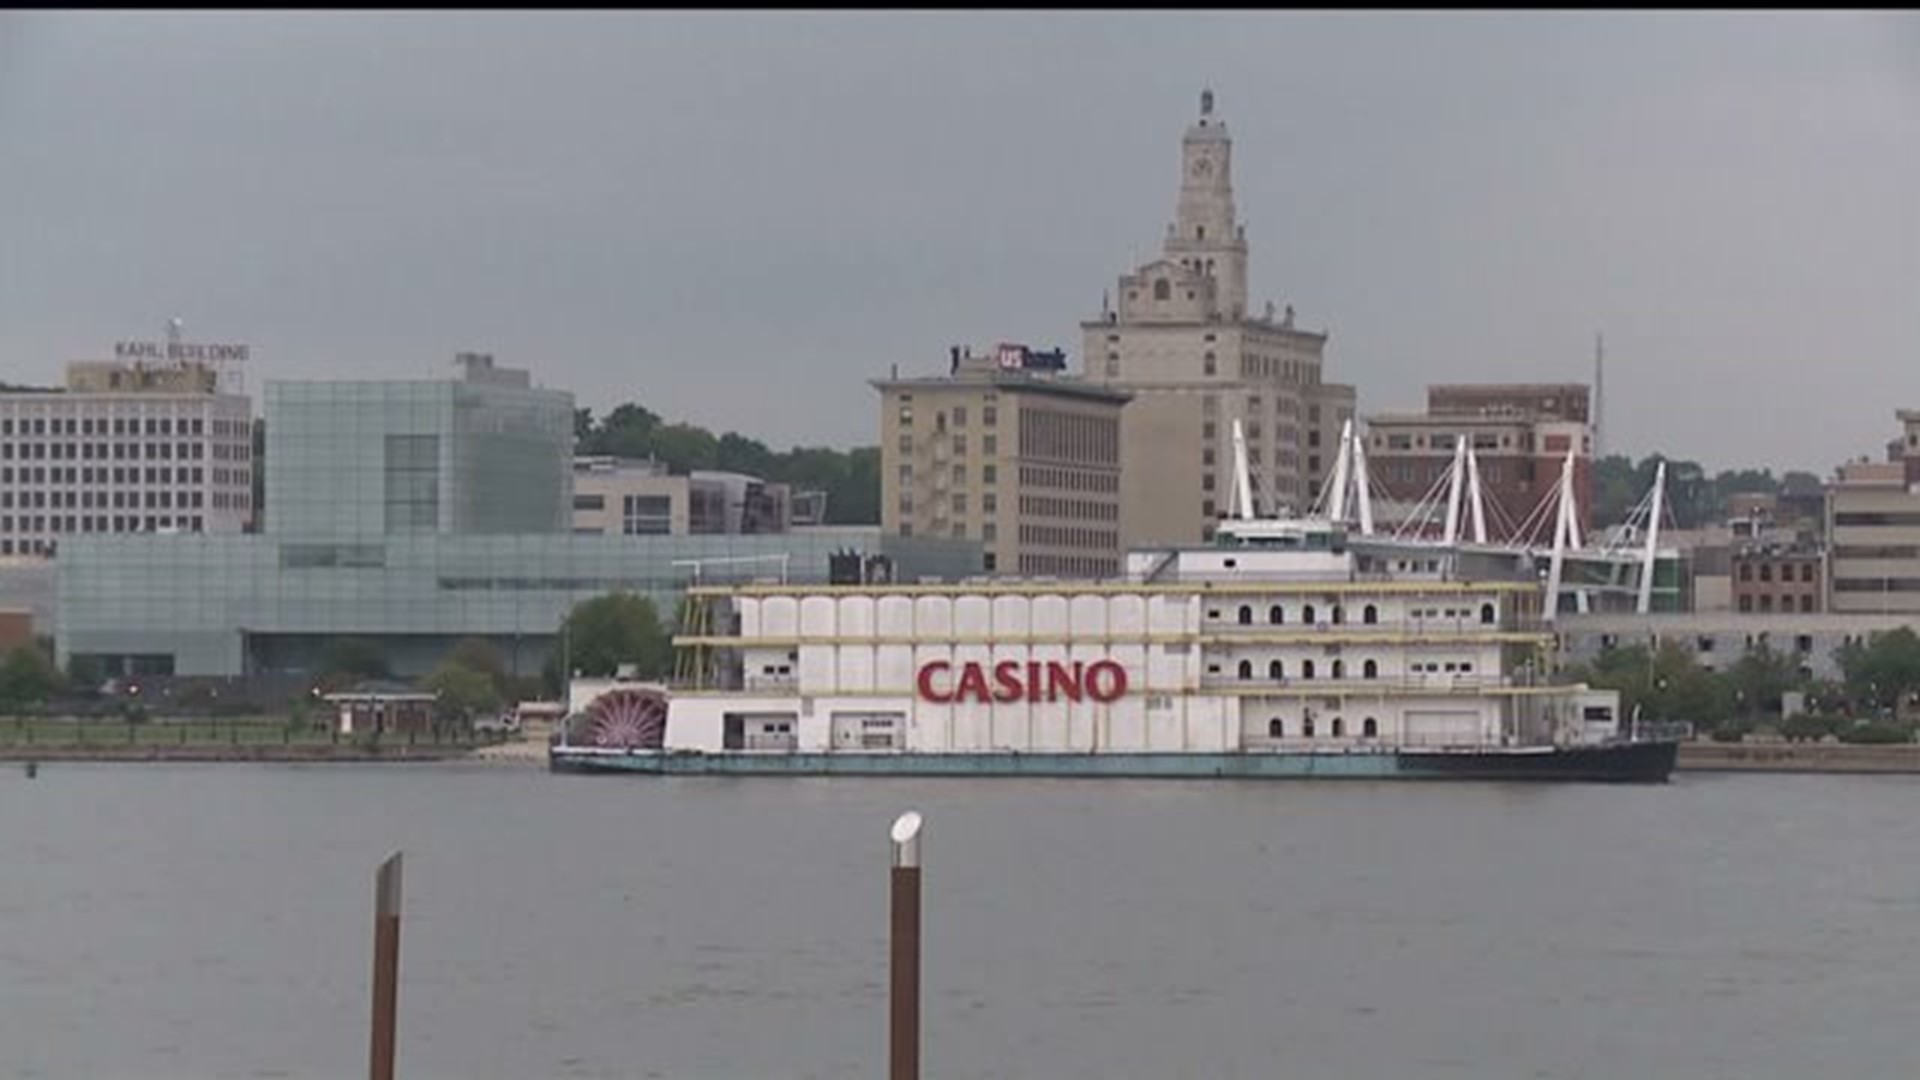 Riverboat casino finally setting sail